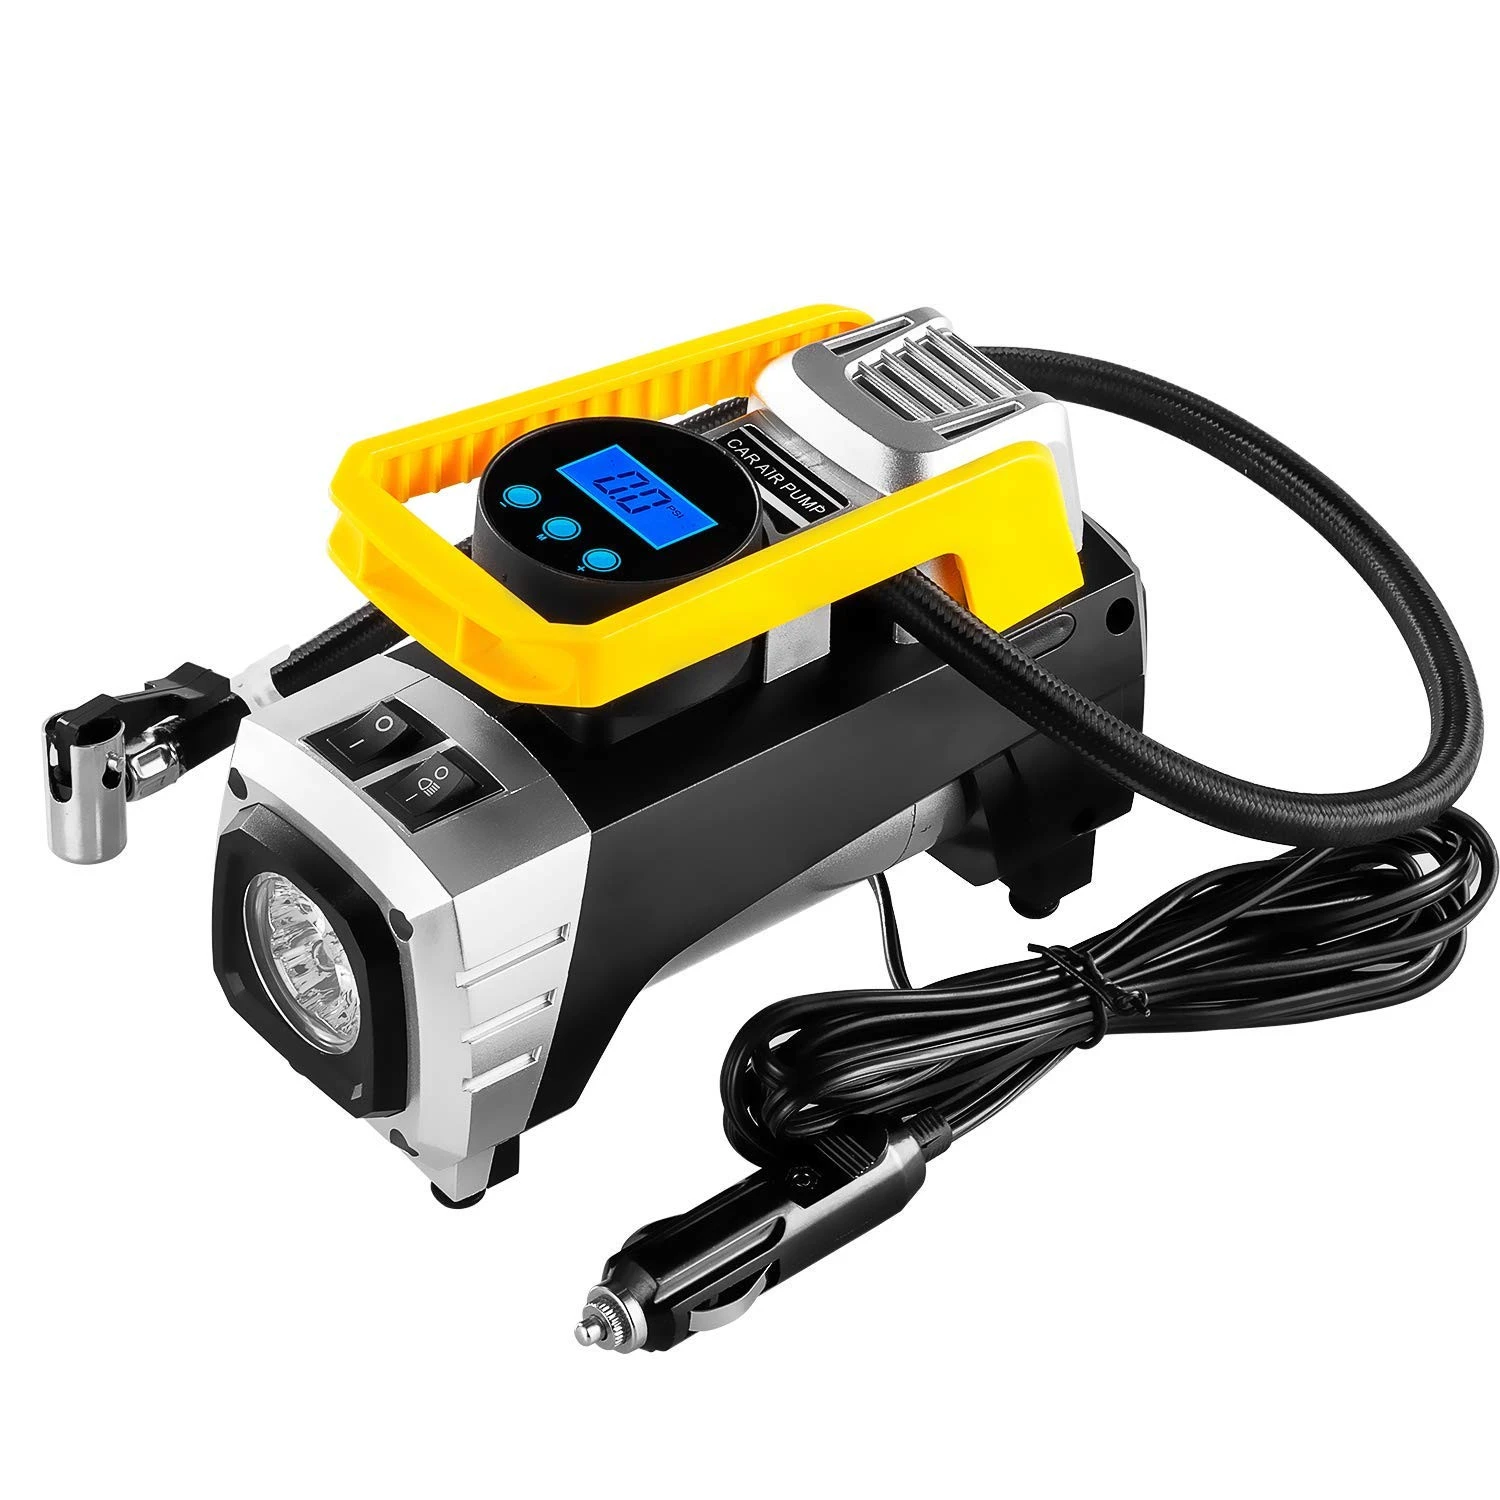 Mini portable electric dc 12v car tire air compressor air pumps,air pumps with lcd display